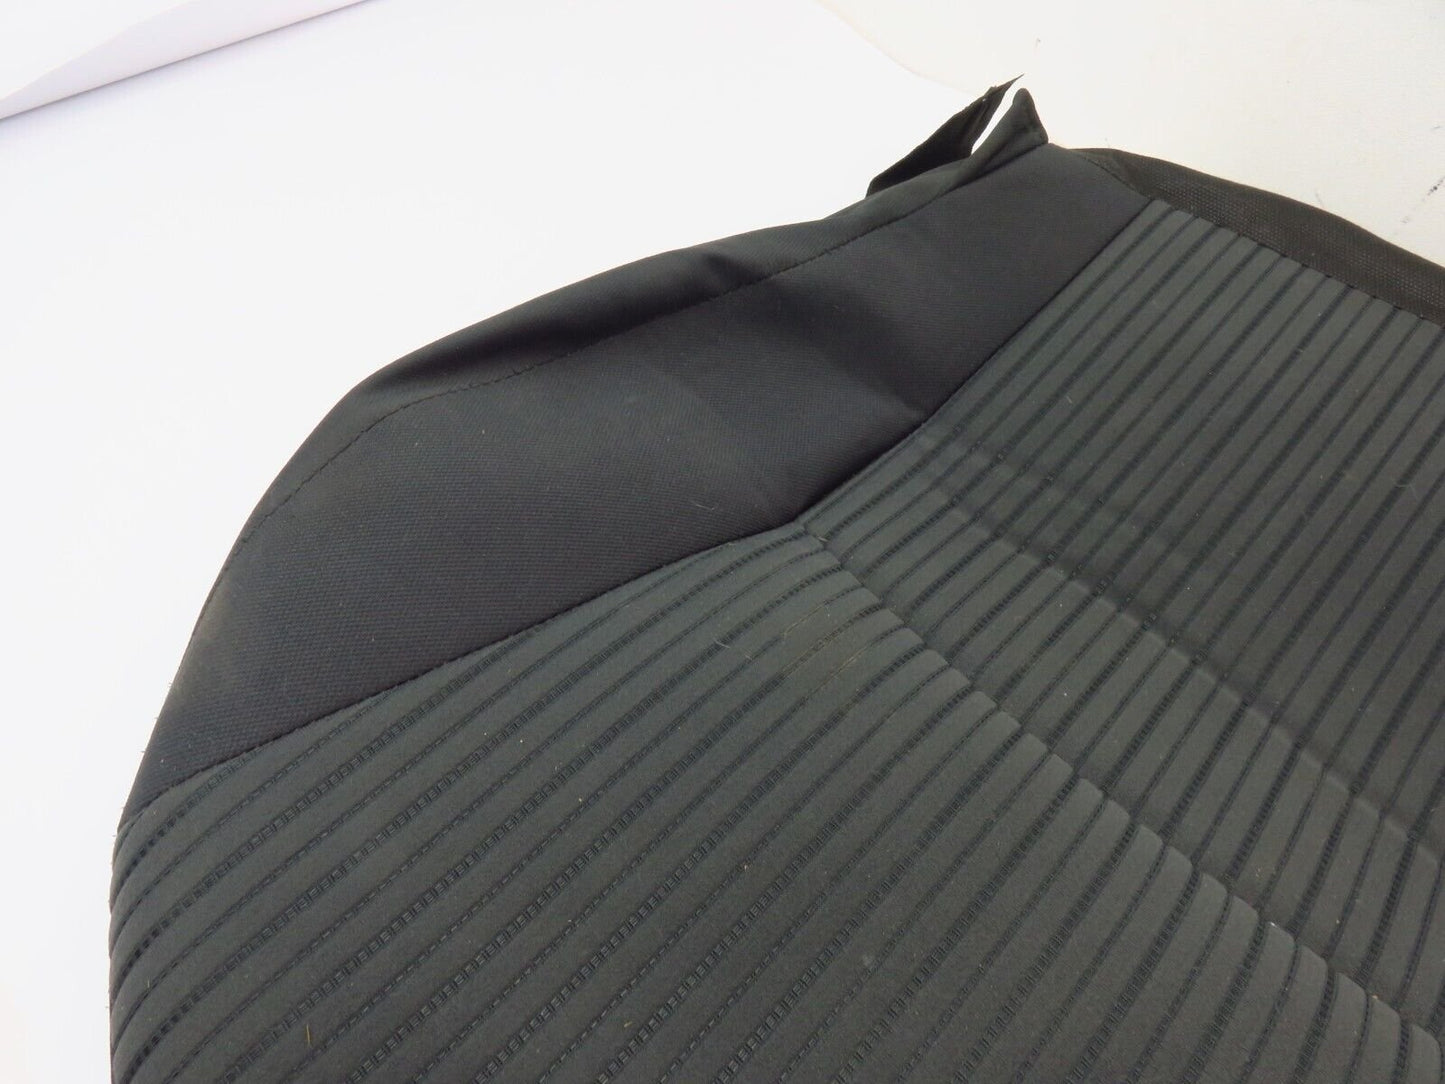 2017-2020 Mitsubishi Mirage G4 Passenger Front Seat Bottom Cover Skin Lower RH